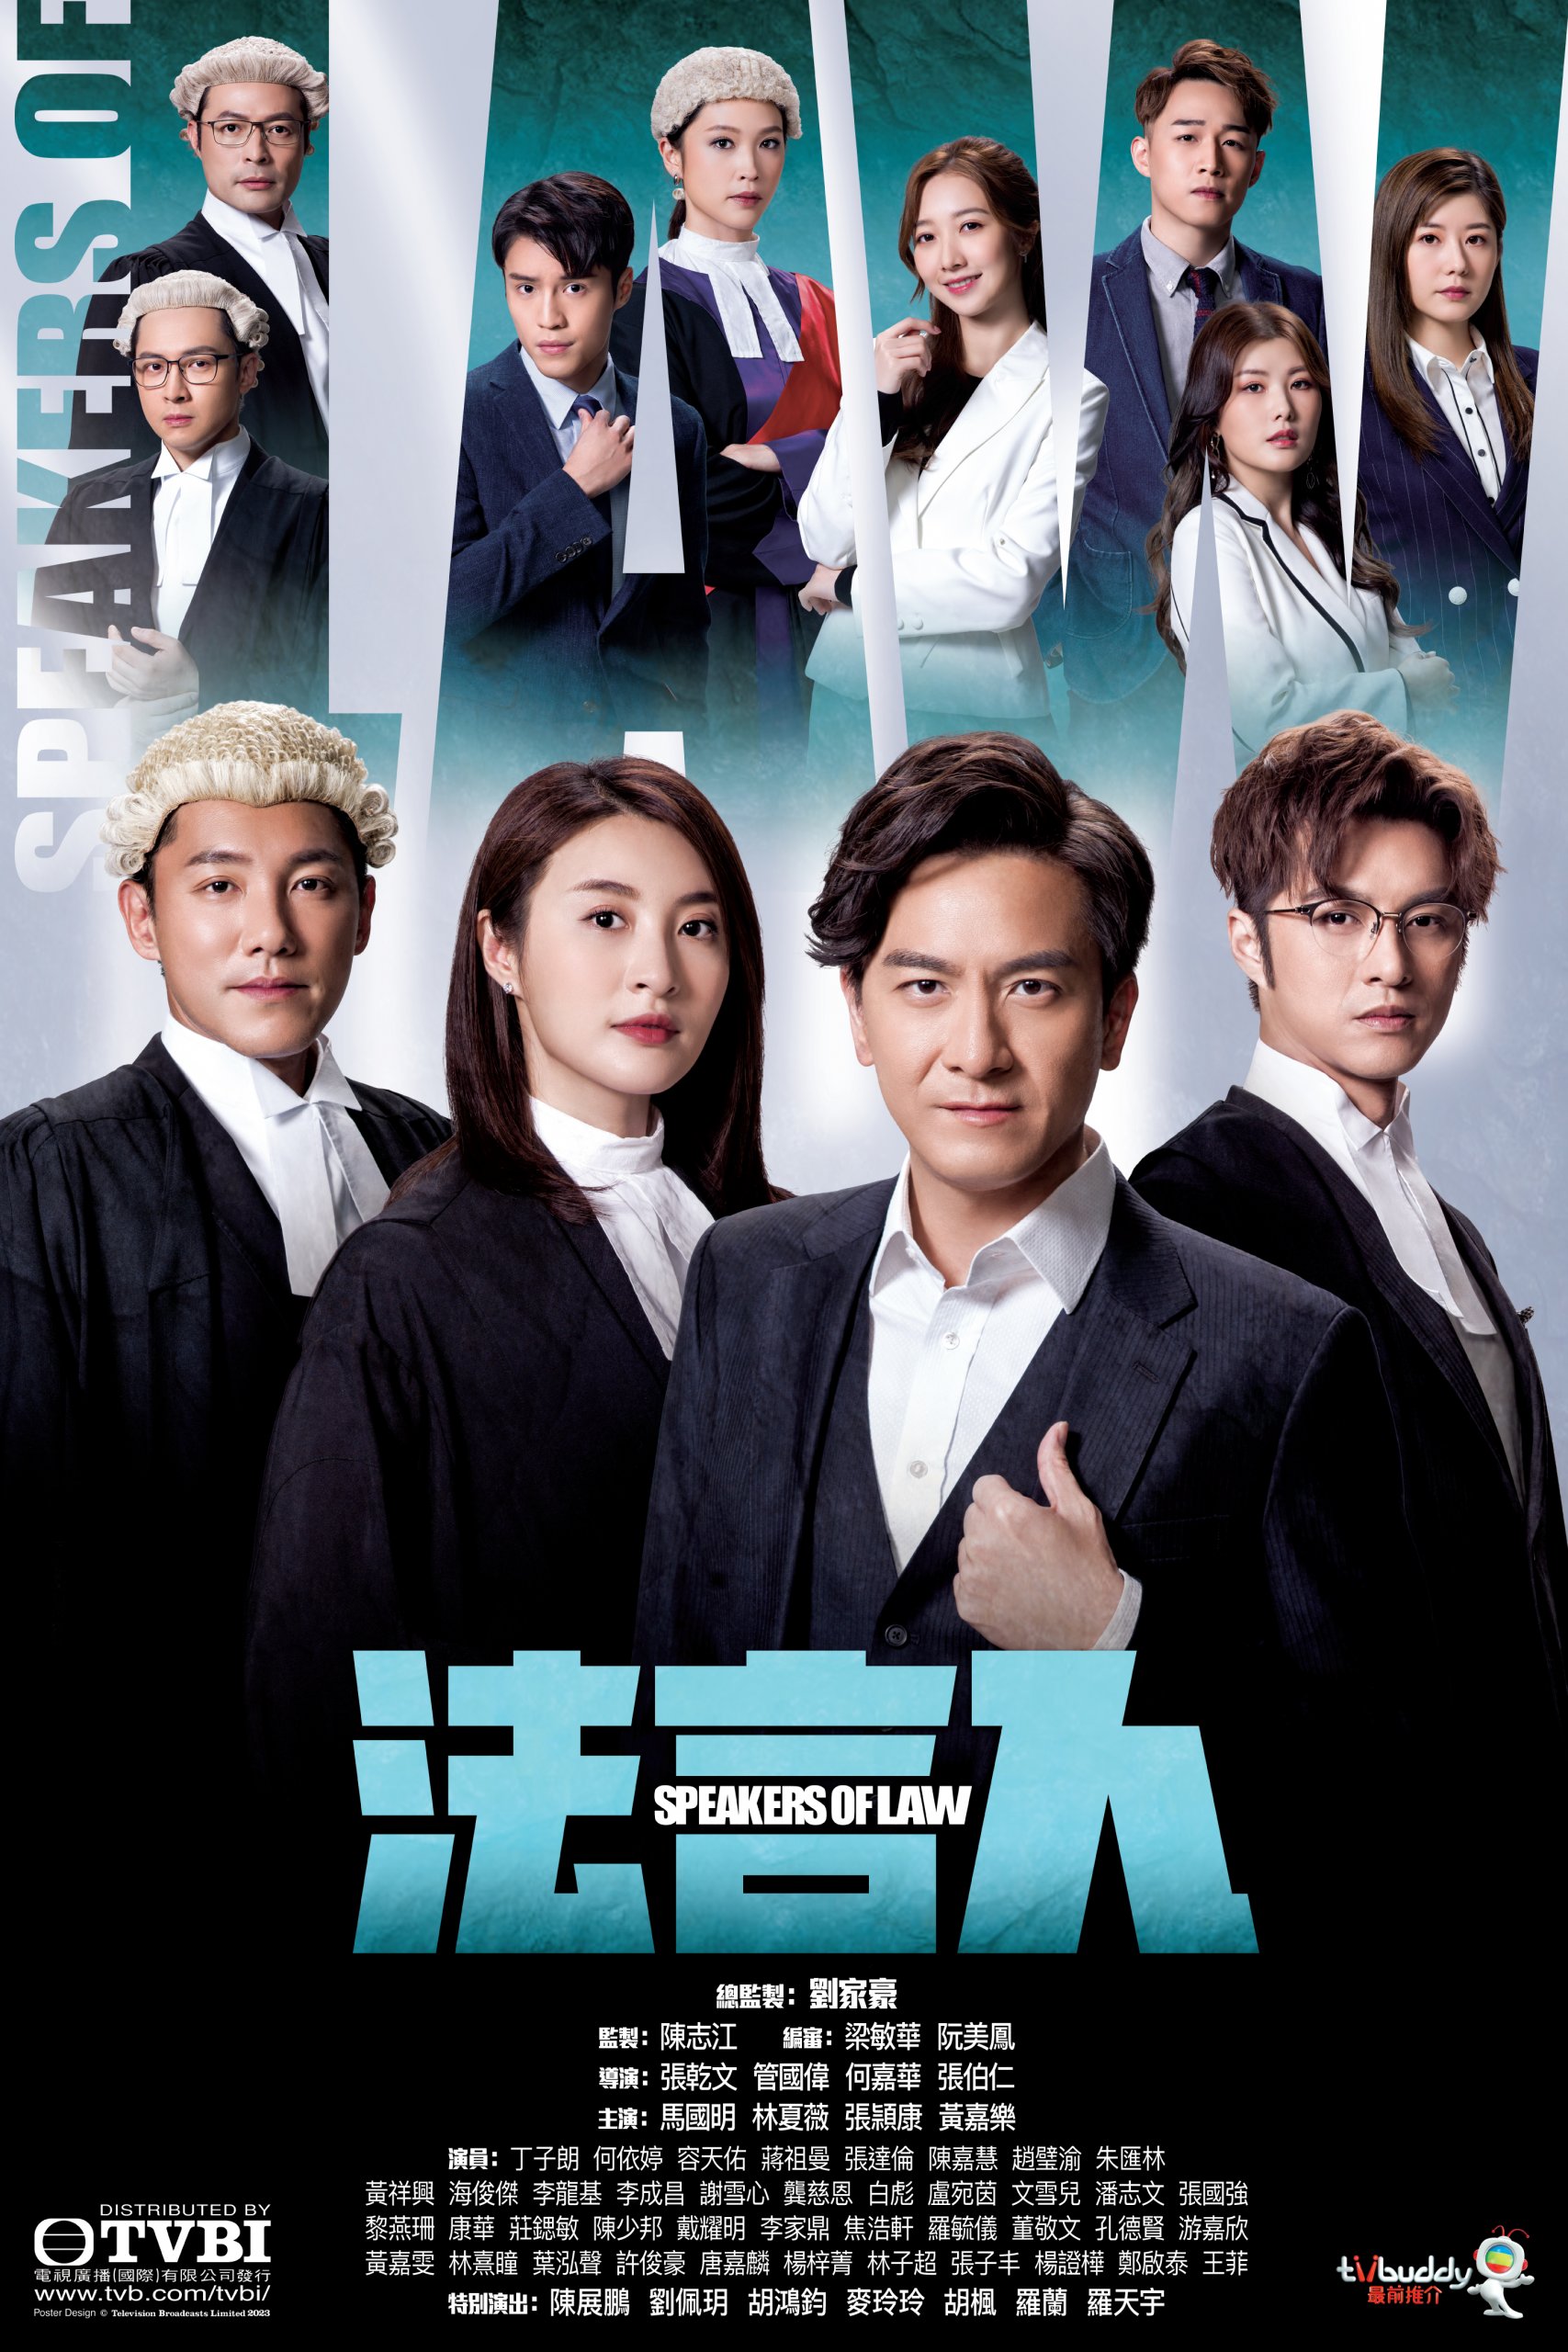 Watch Cantonese & Hong Kong Drama Series Online In Singapore